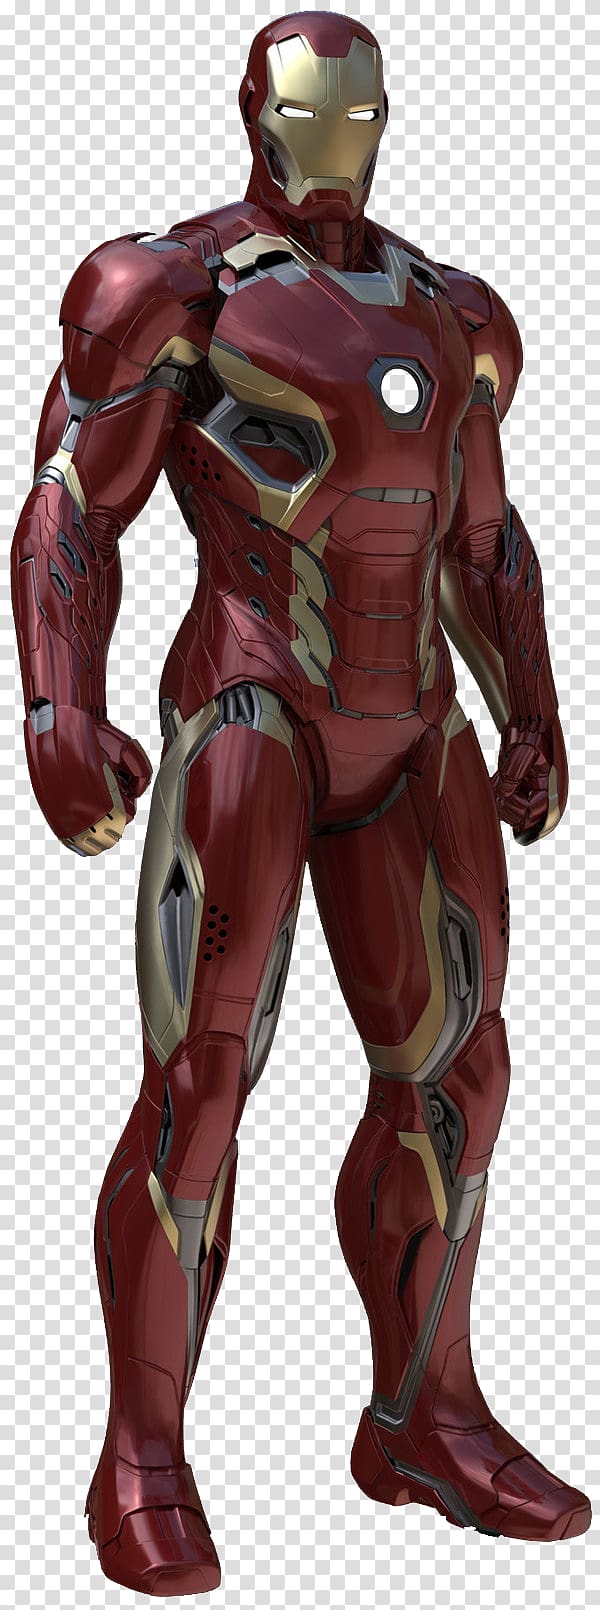 Marvel Ironman illustration, Iron Man Edwin Jarvis Howard Stark Extremis Vision, Iron Man model transparent background PNG clipart